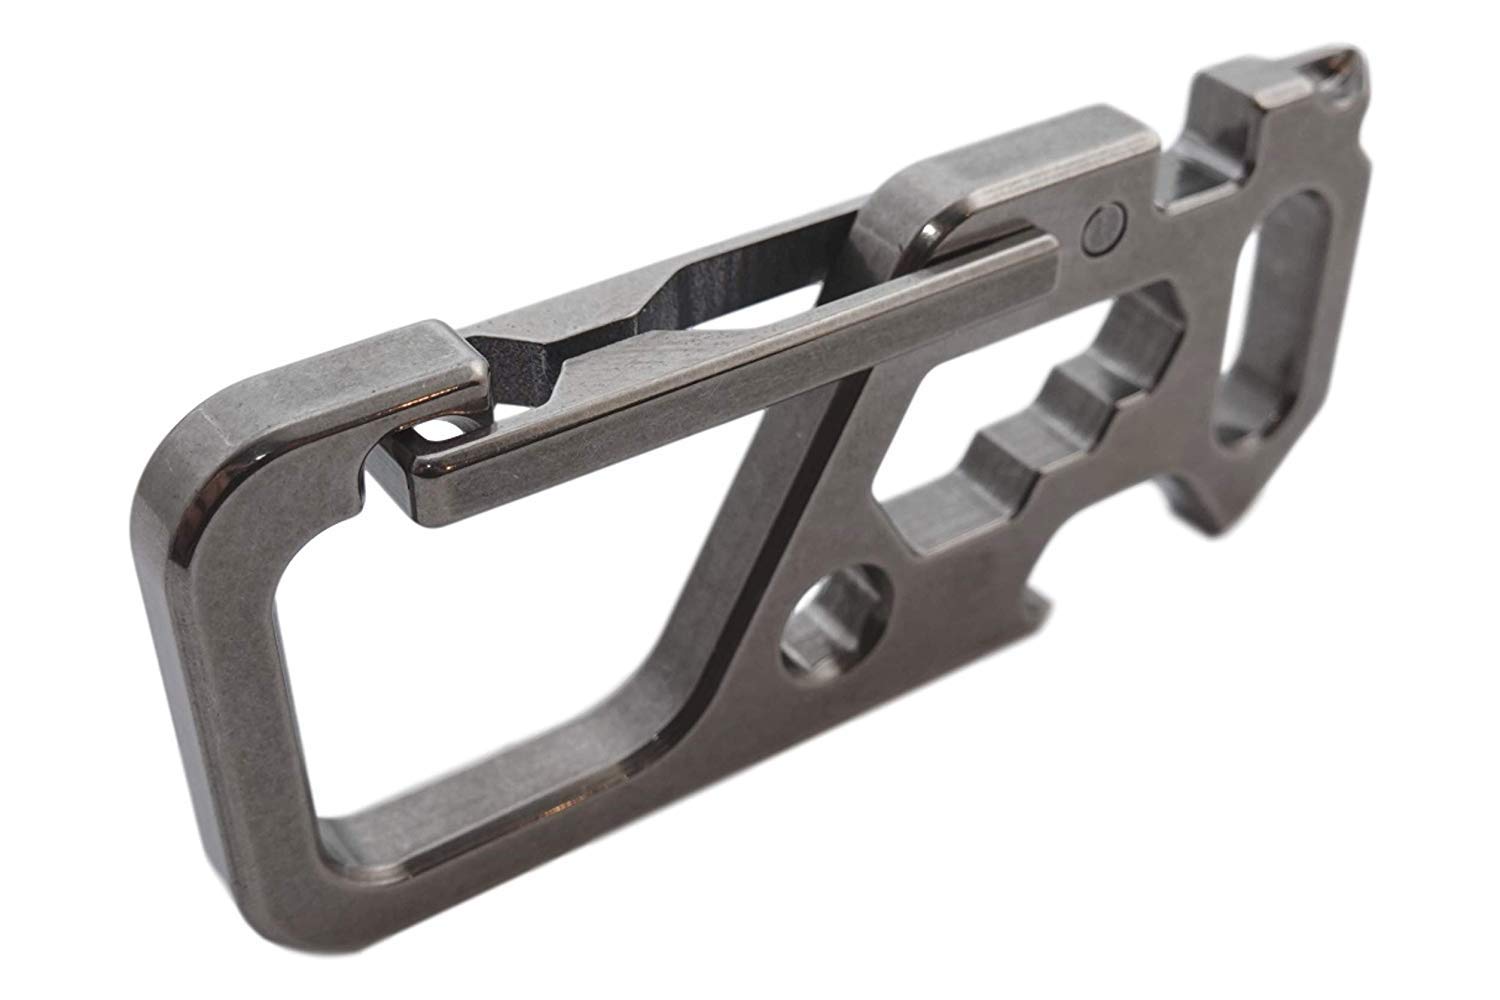 Valtcan Titanium Carabiner Multi Tool Key Chain Holder Glossy Stonewas